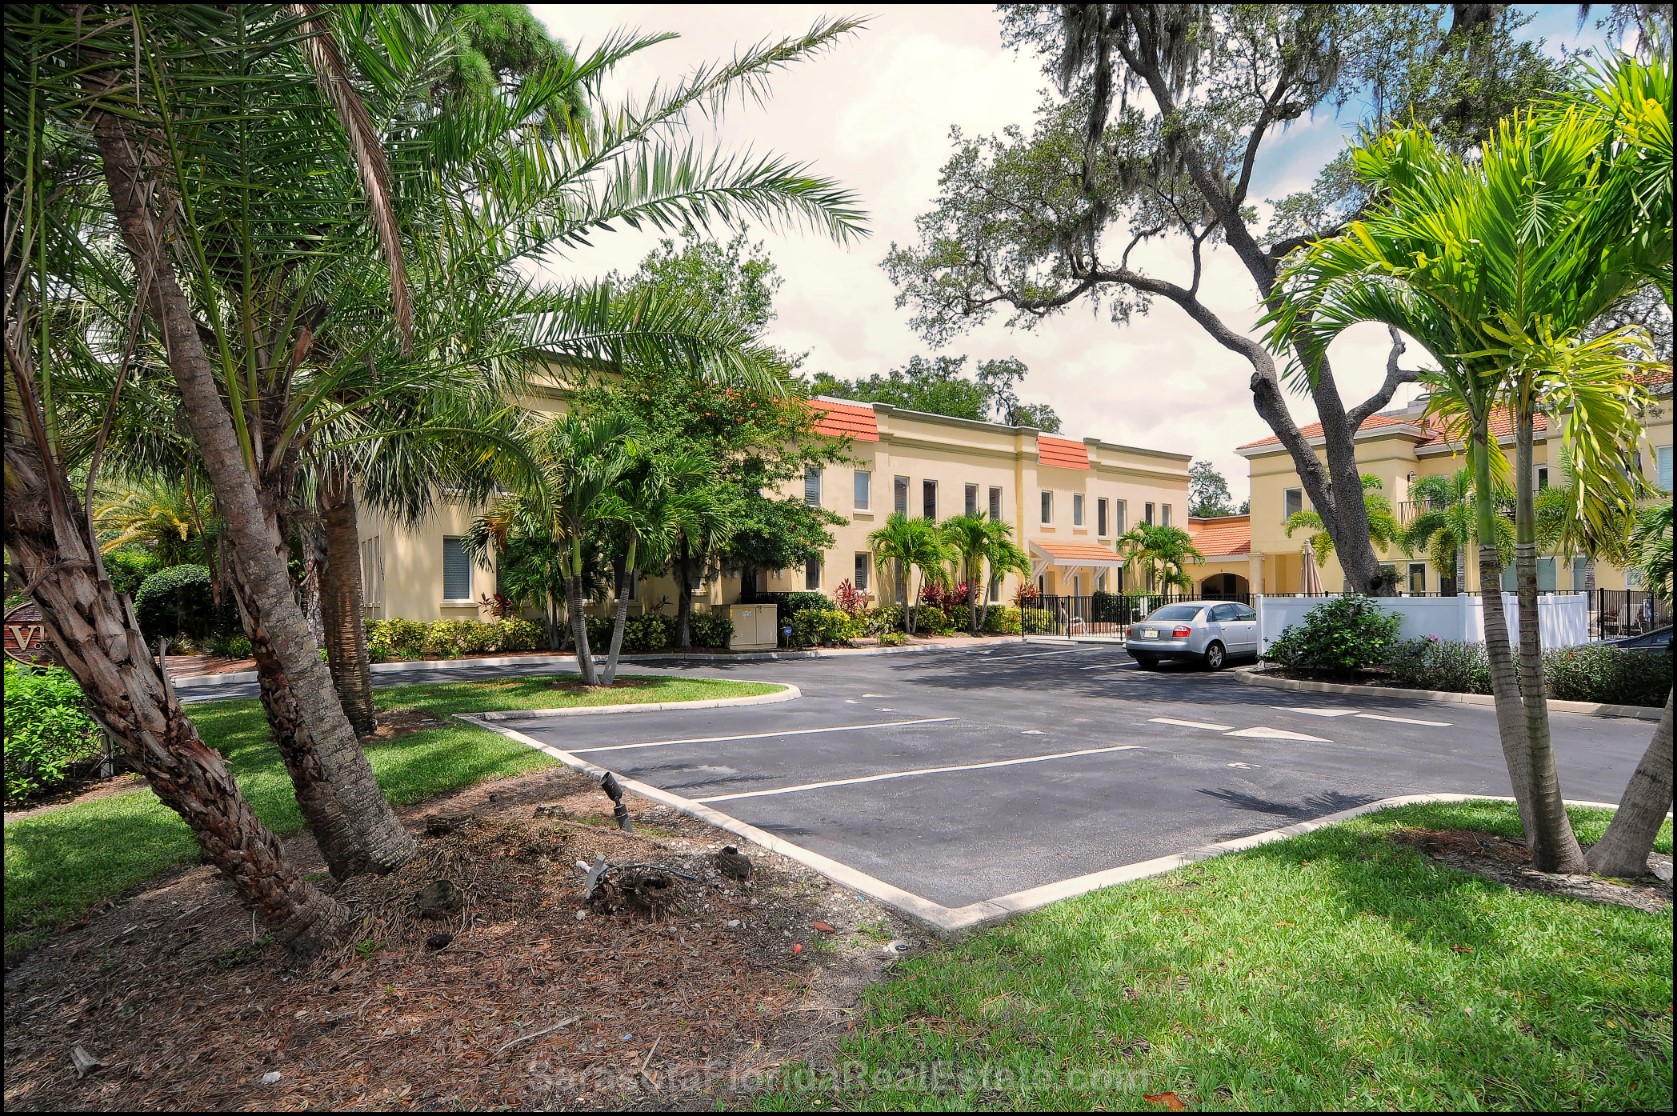 Villas on Laurel Sarasota